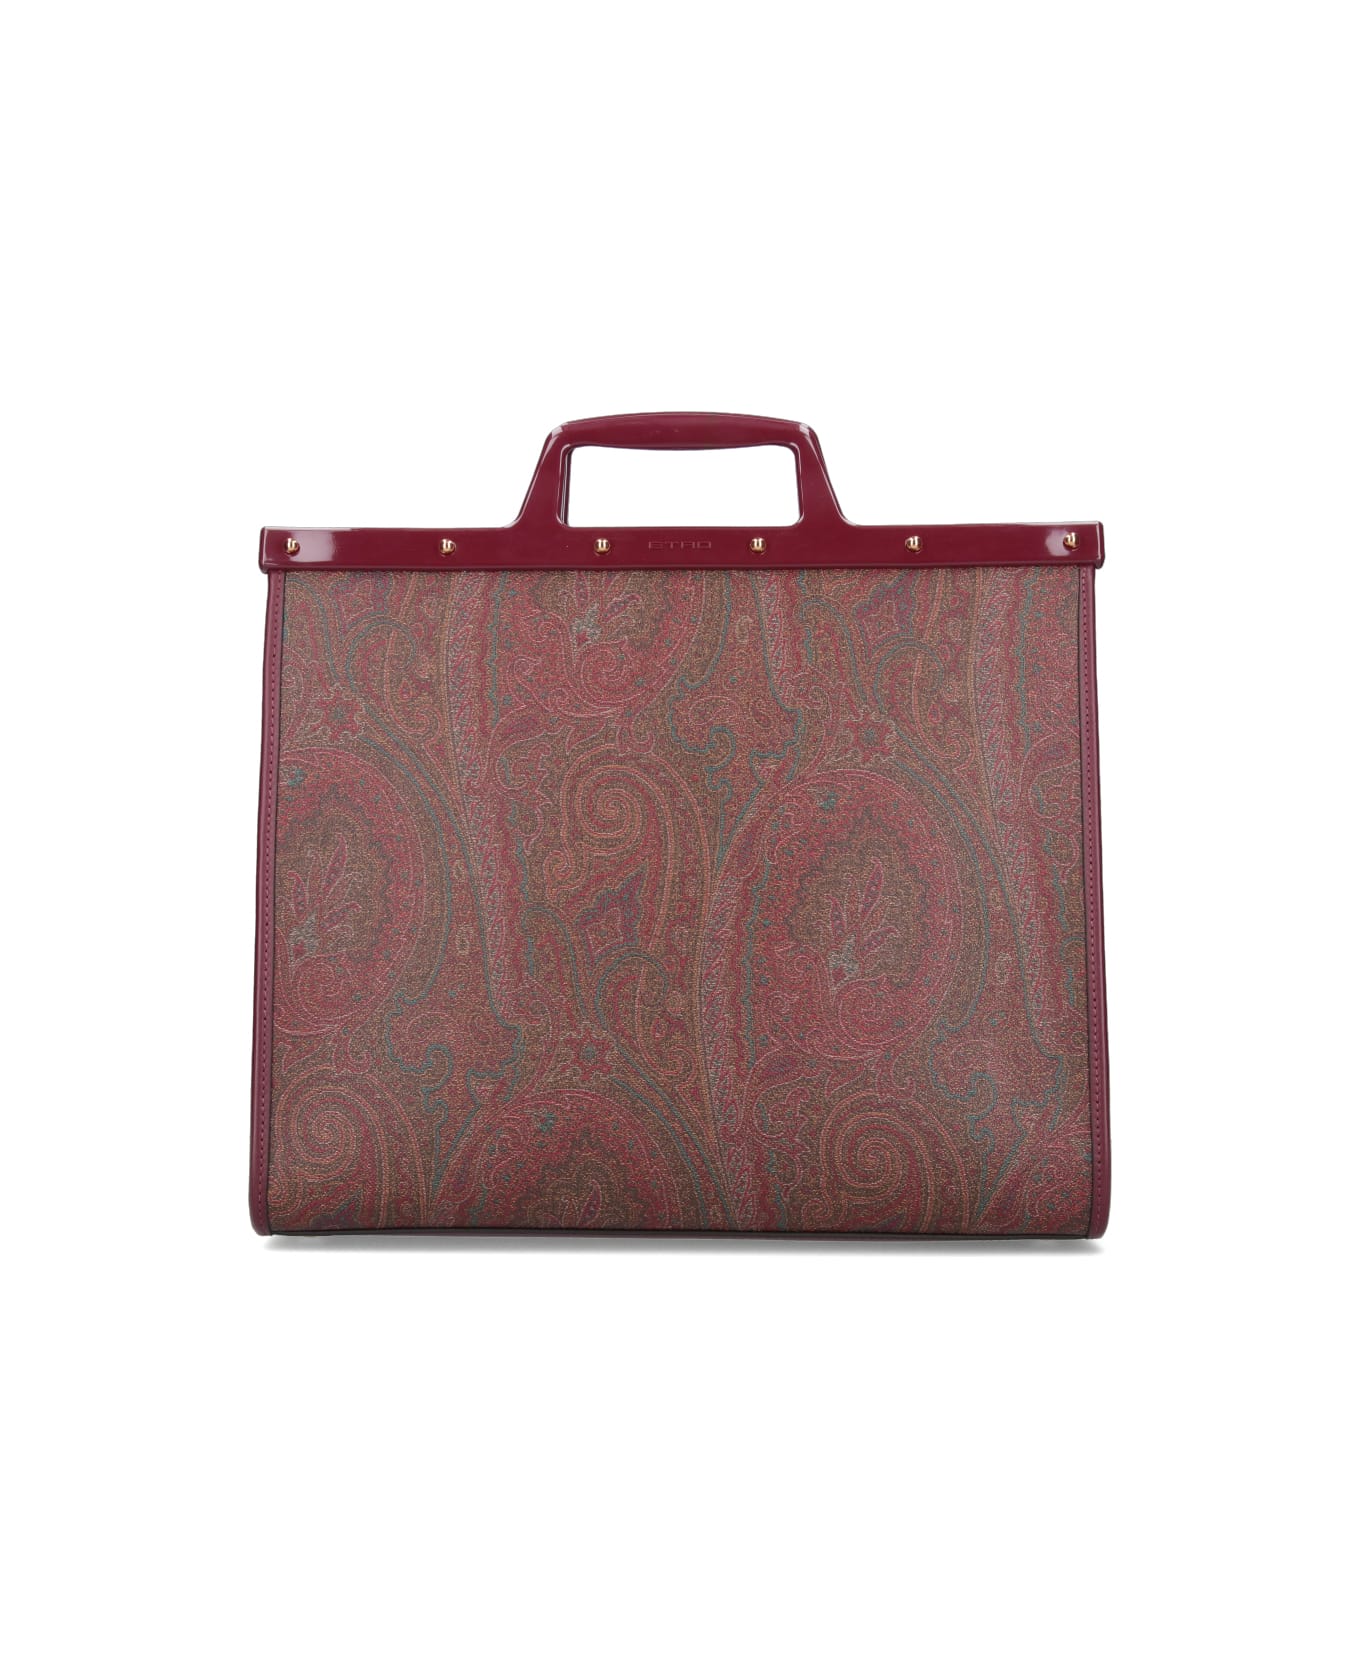 Etro Medium Bag "shopping Love Trotter" - Red